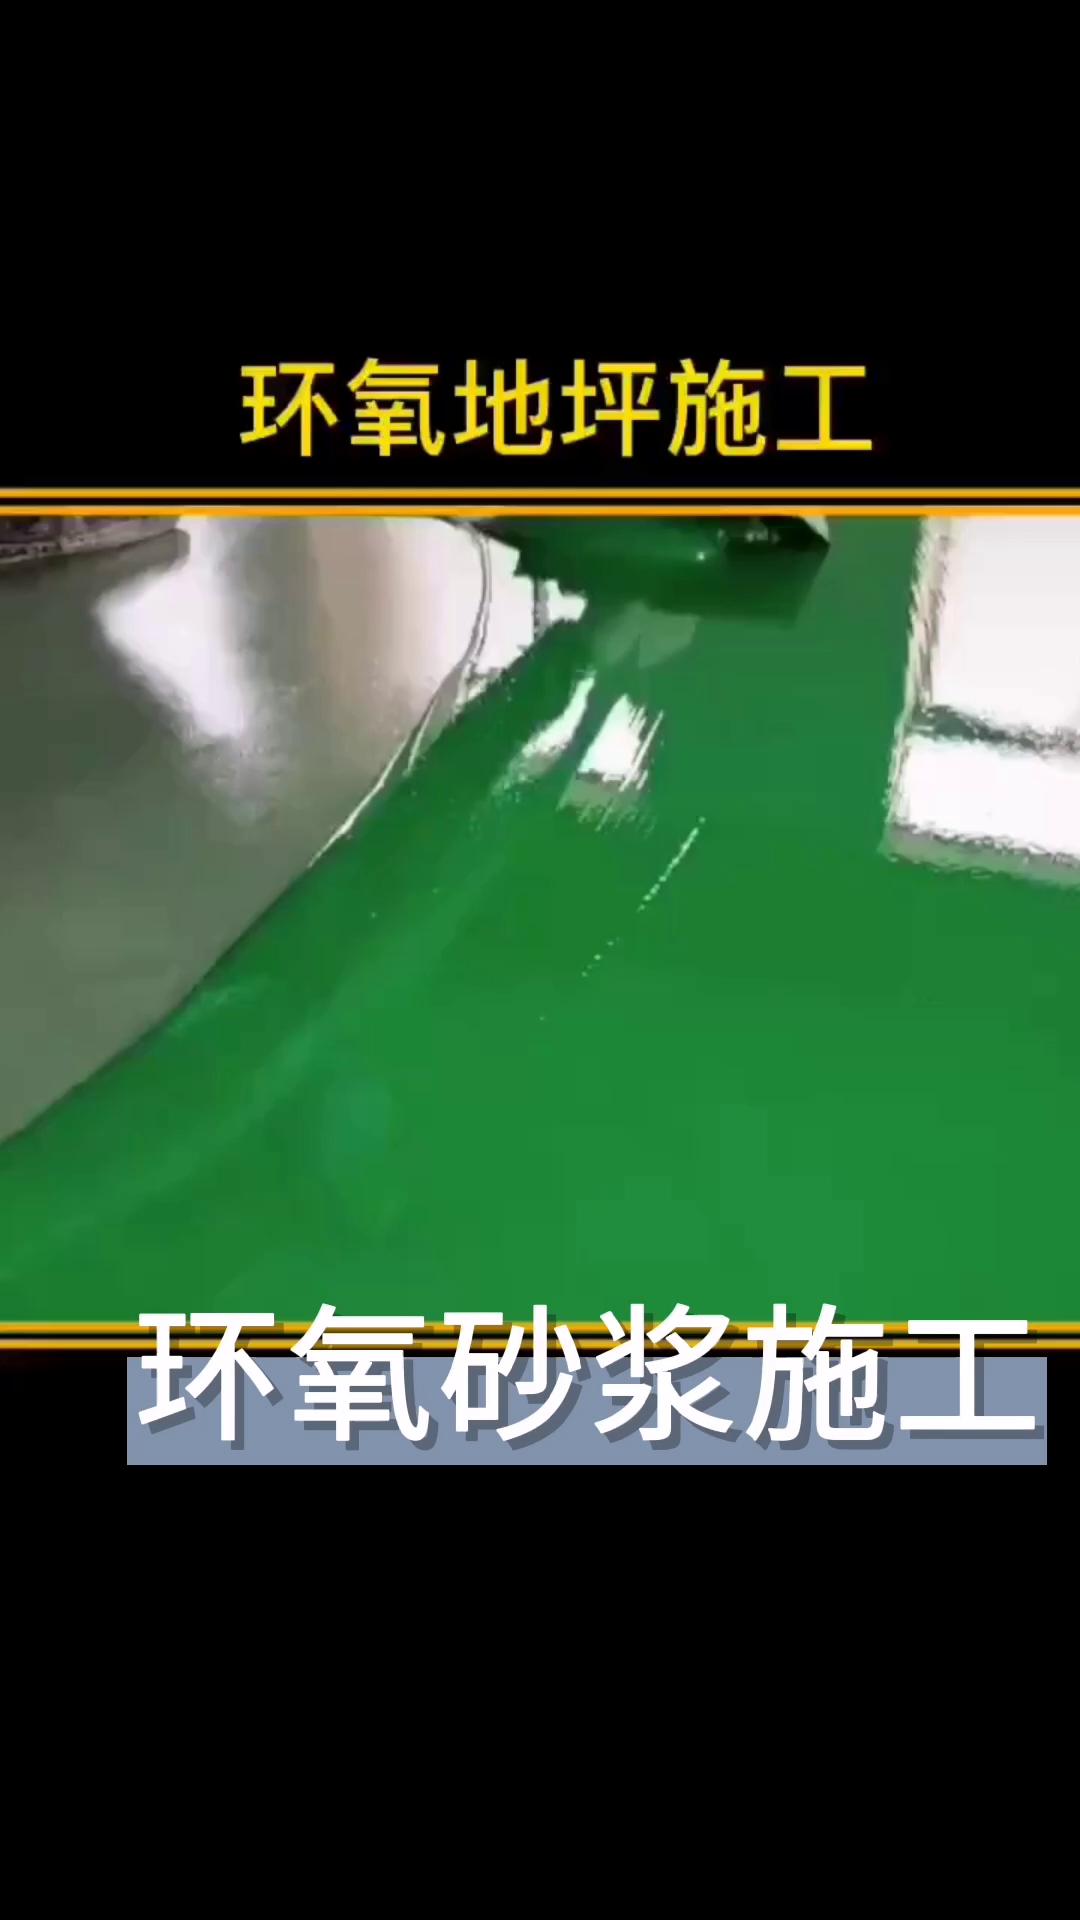 Epoxy heavy duty floor paint industrial coating